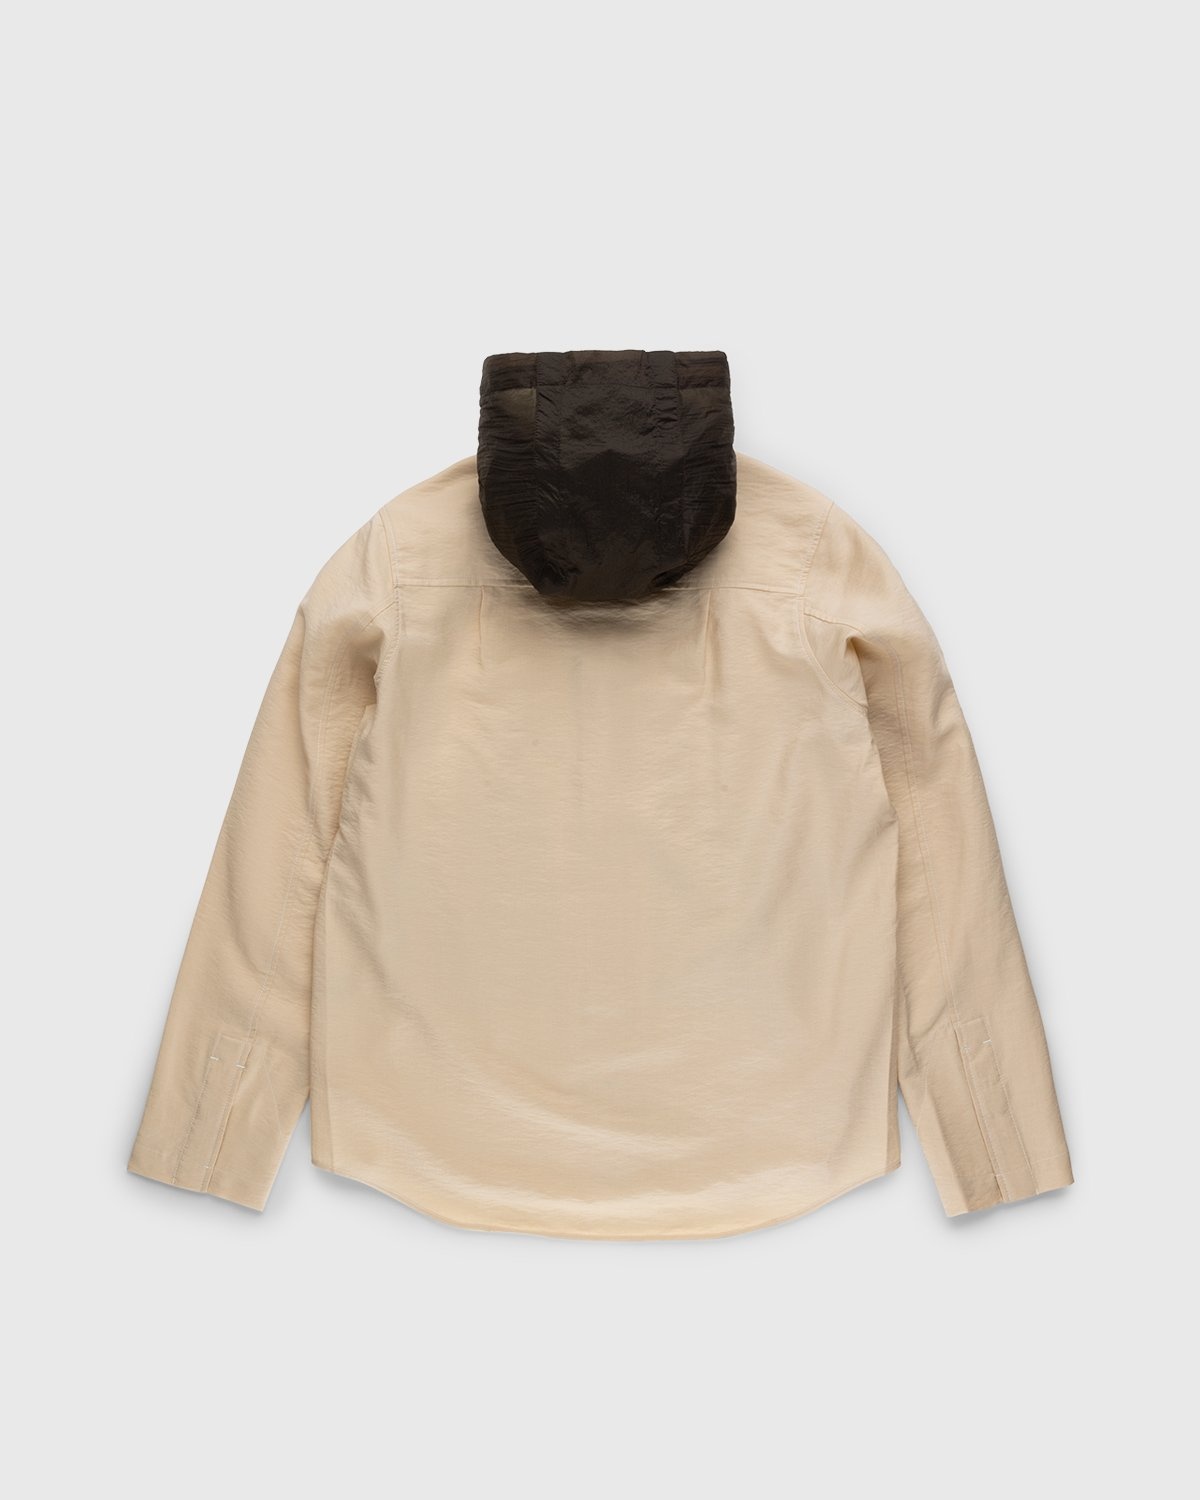 Arnar Mar Jonsson – Solarlag Hooded Shirt Melon/Chocolate - Overshirt - Beige - Image 2